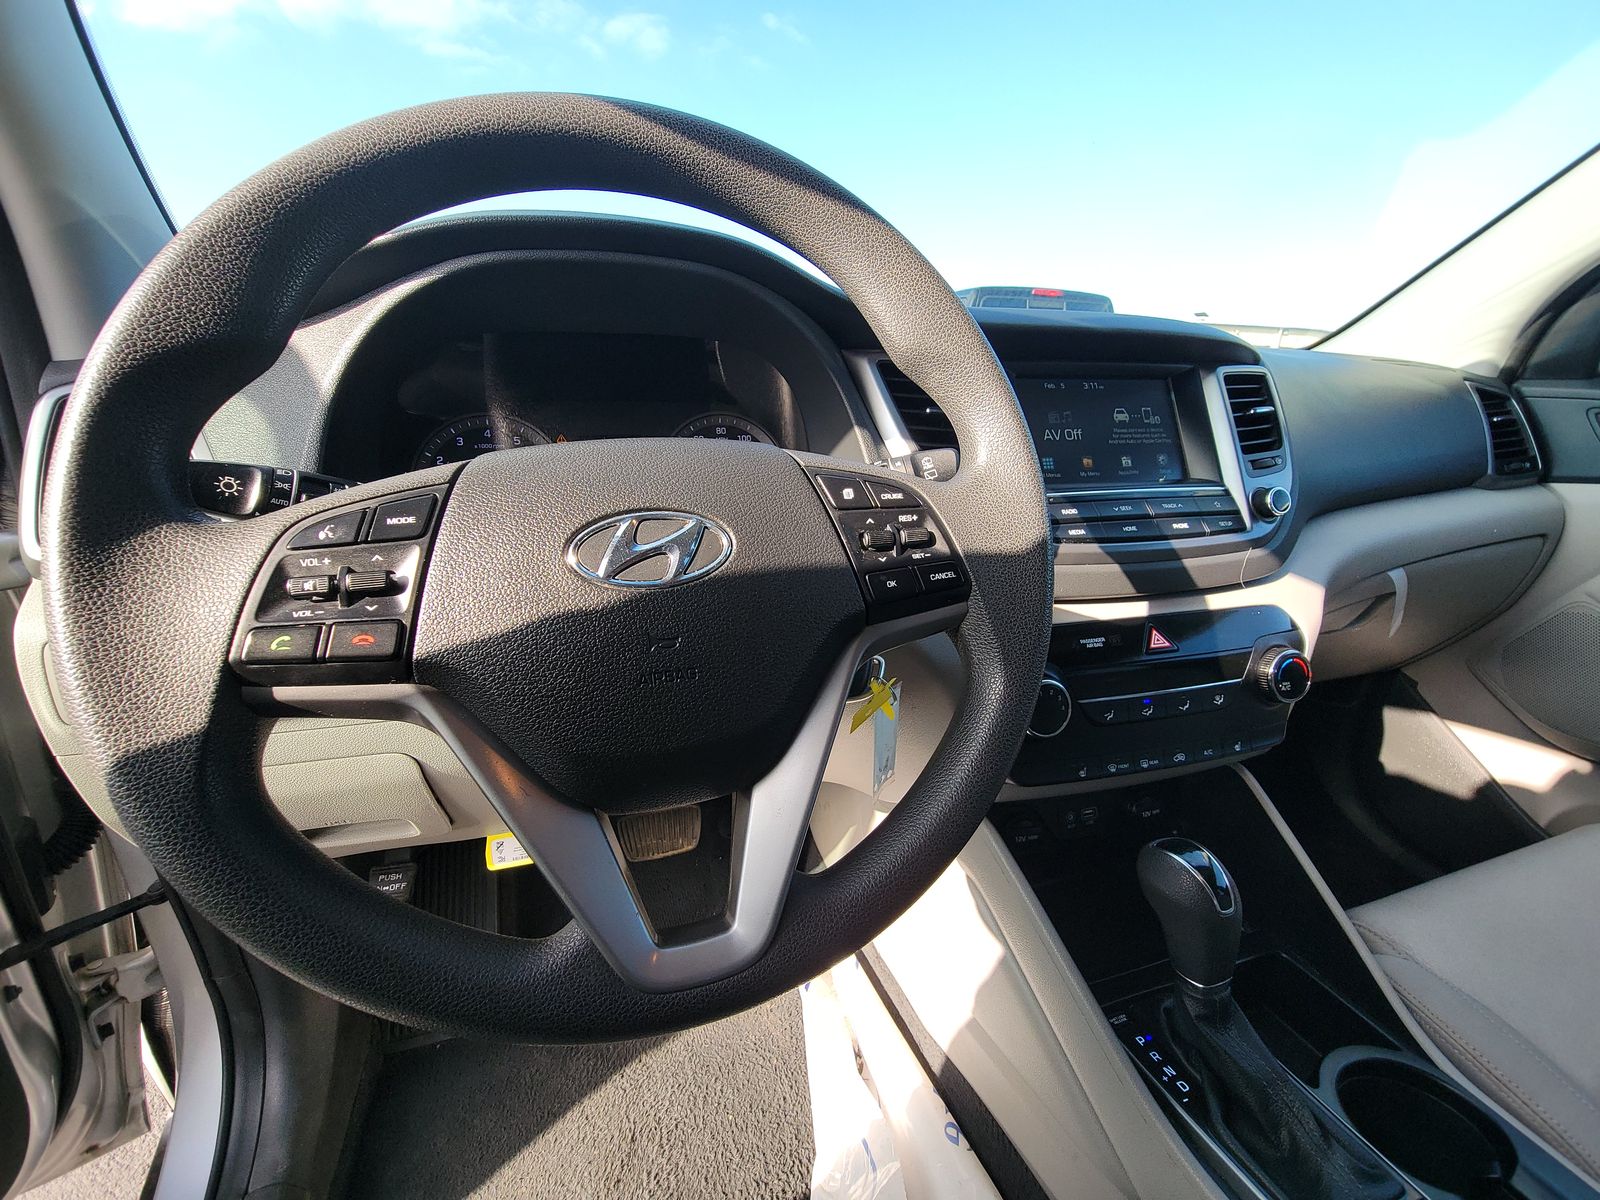 2018 Hyundai Tucson SEL AWD